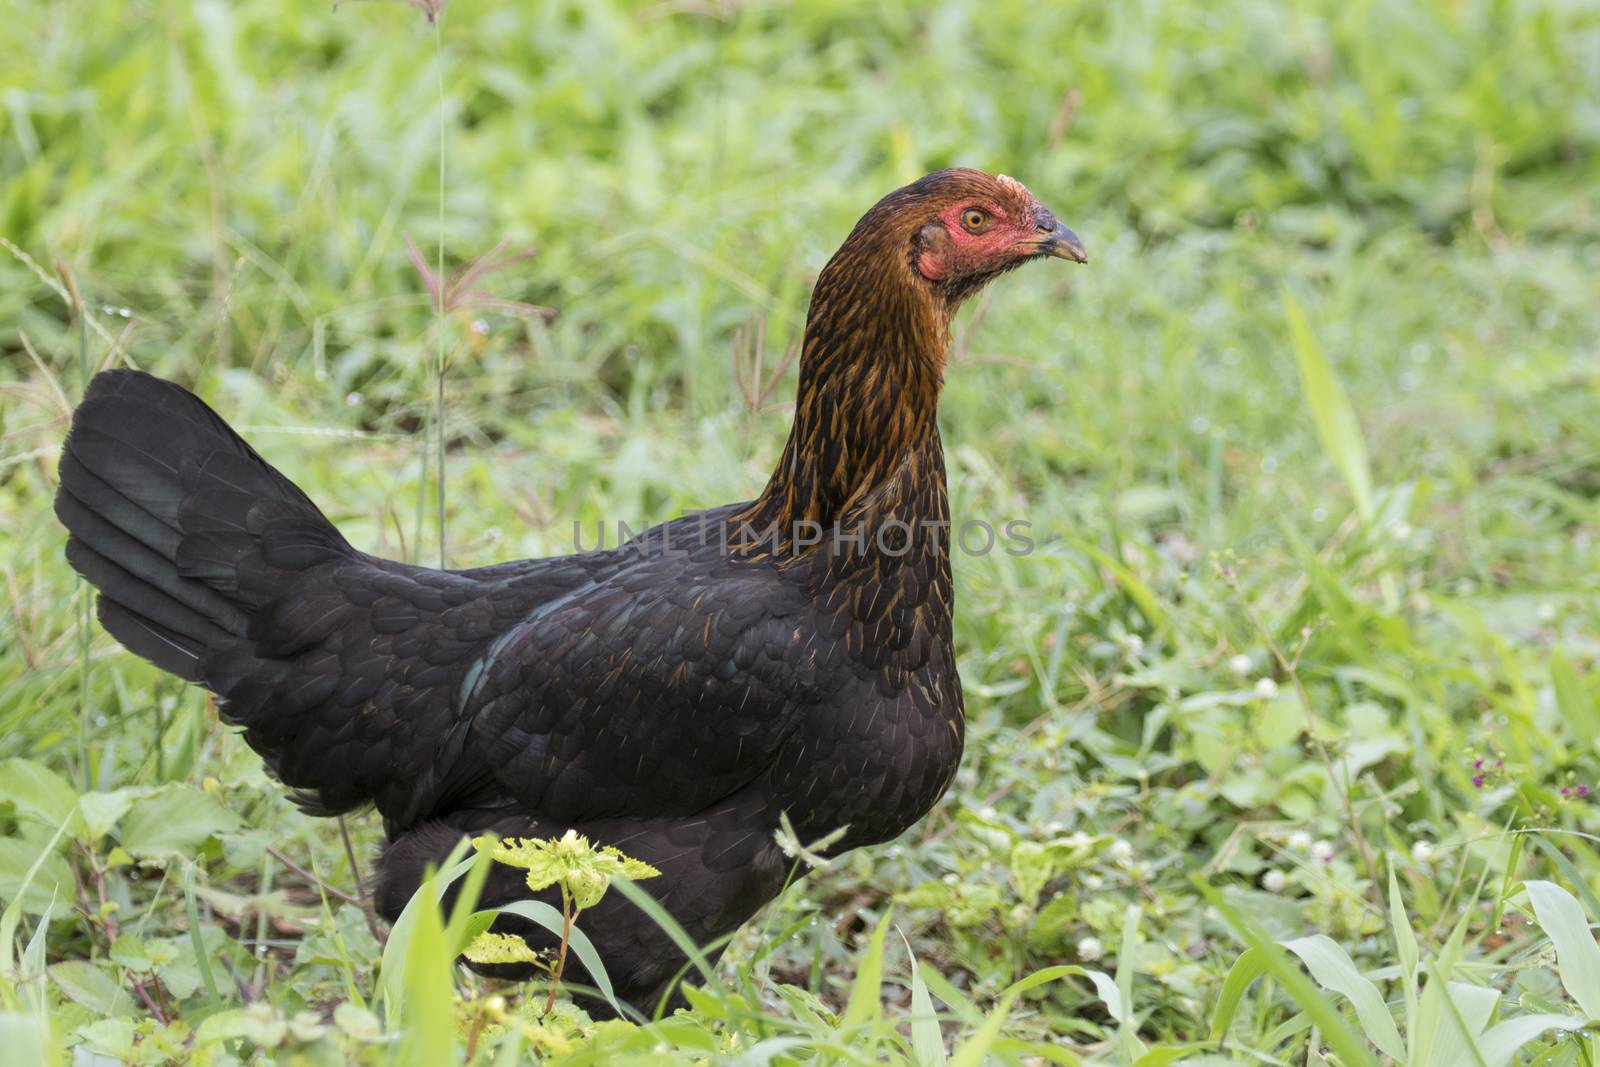 Image of a hen in green field.